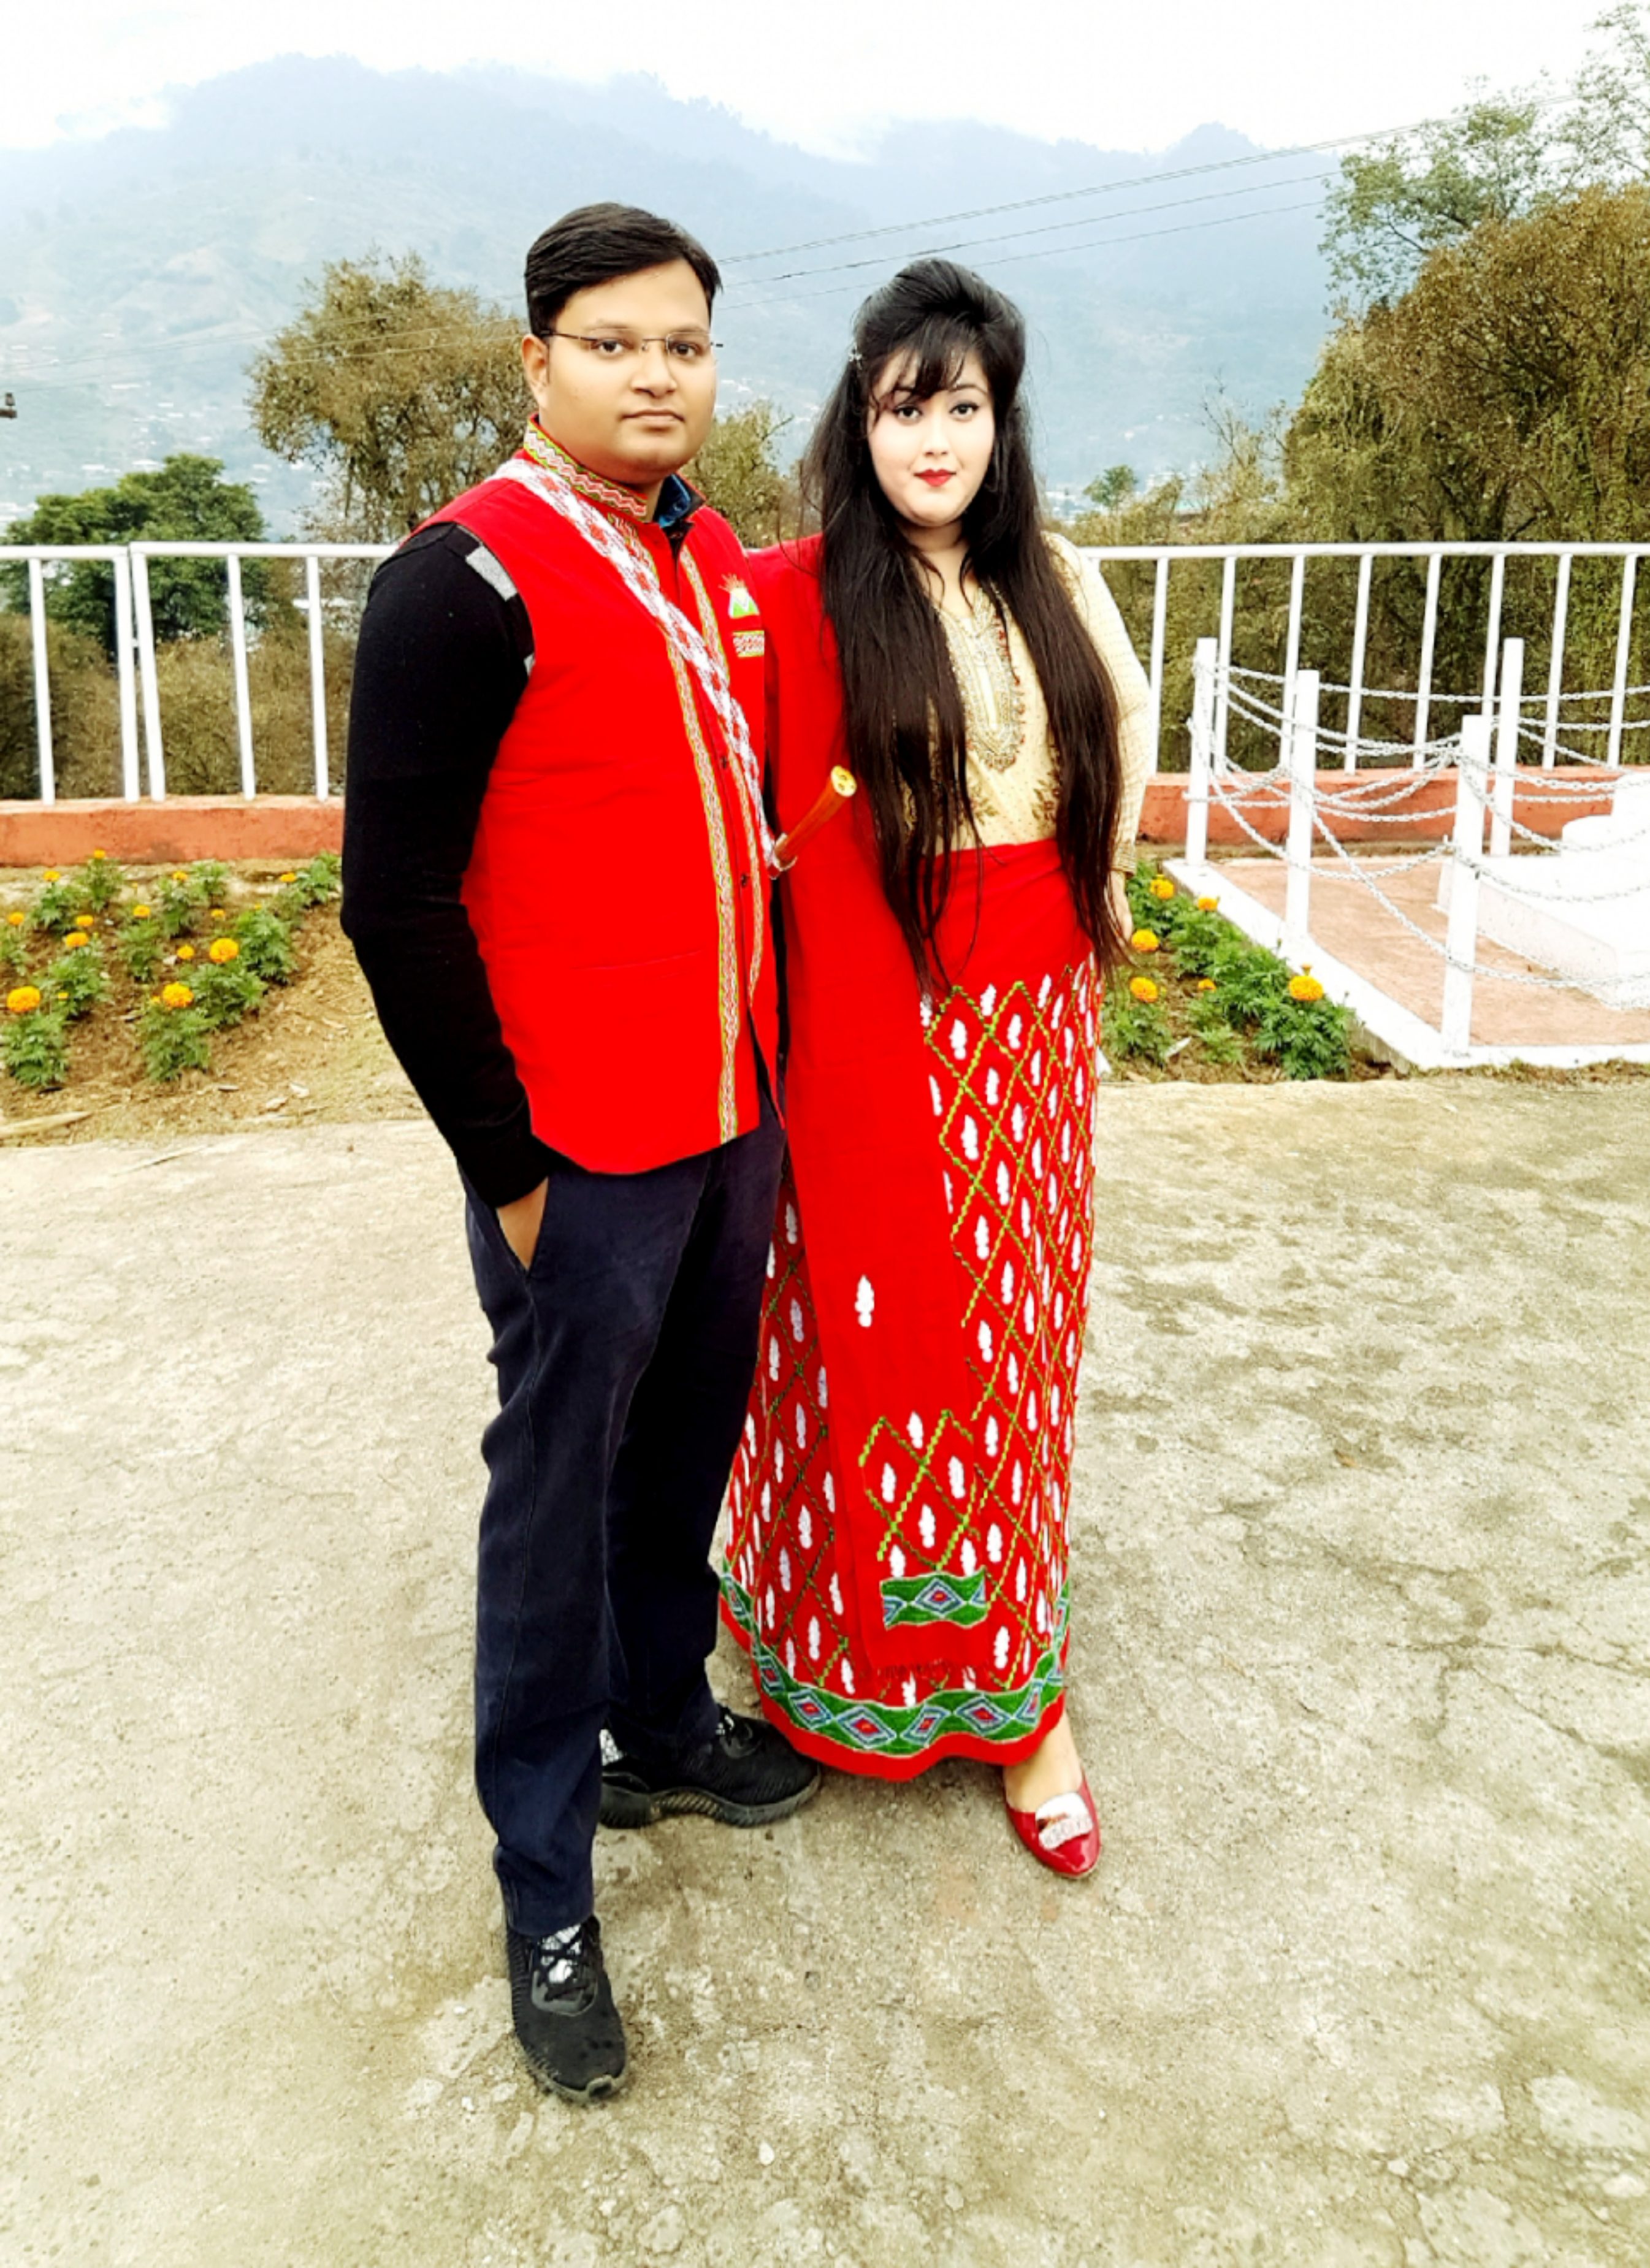 Ias hero wife teaches govt school arunachal pradesh heartwarming india